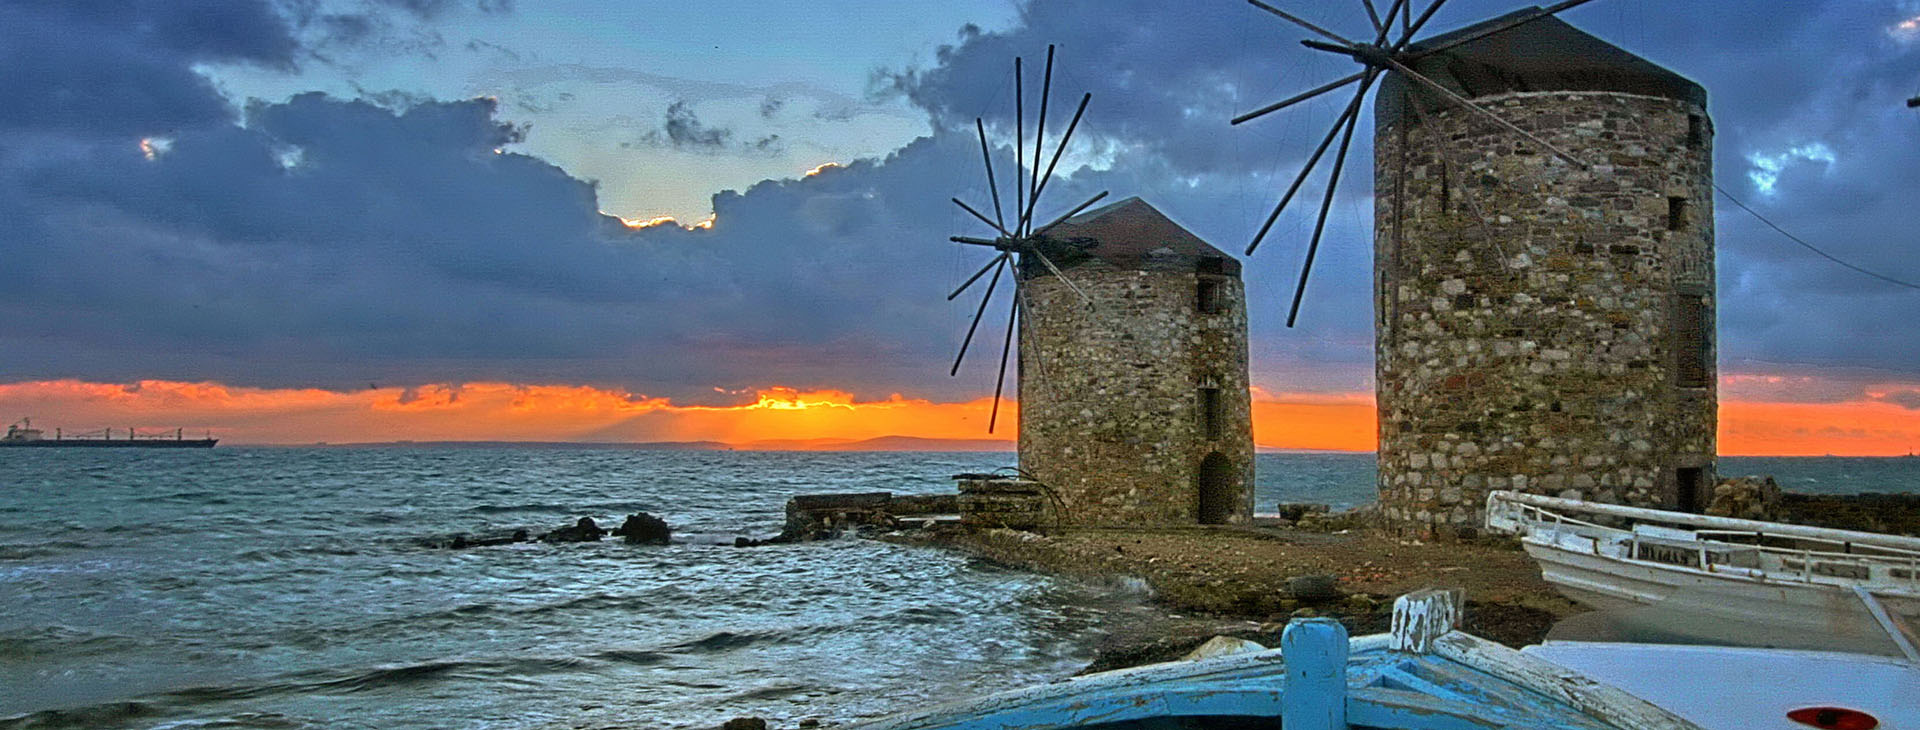 Windmills, Chios island